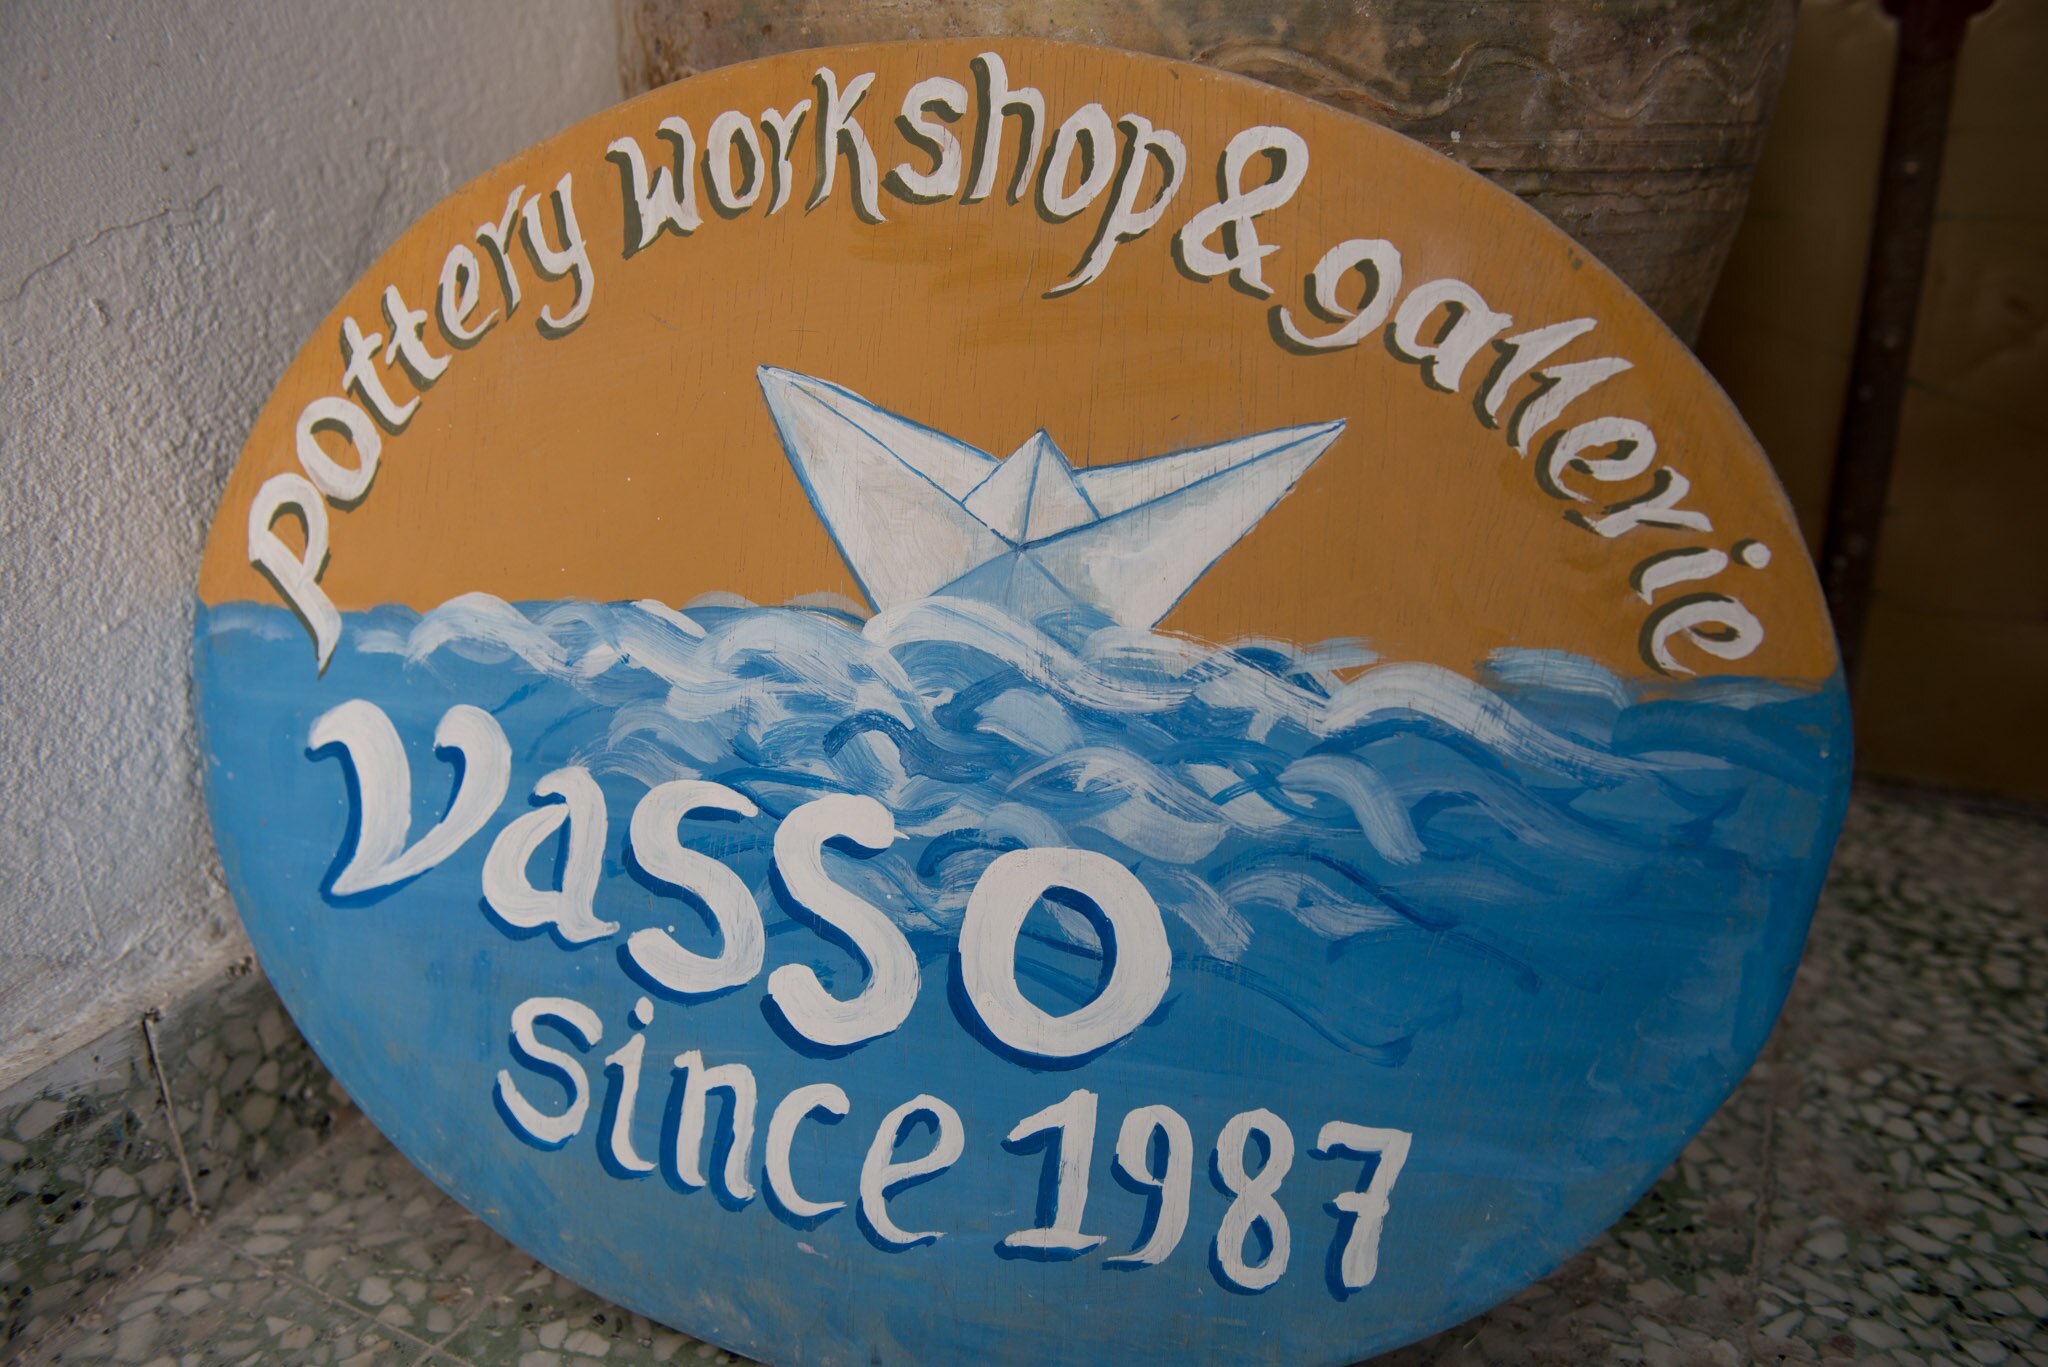 Vasso Art Gallery pottery workshop